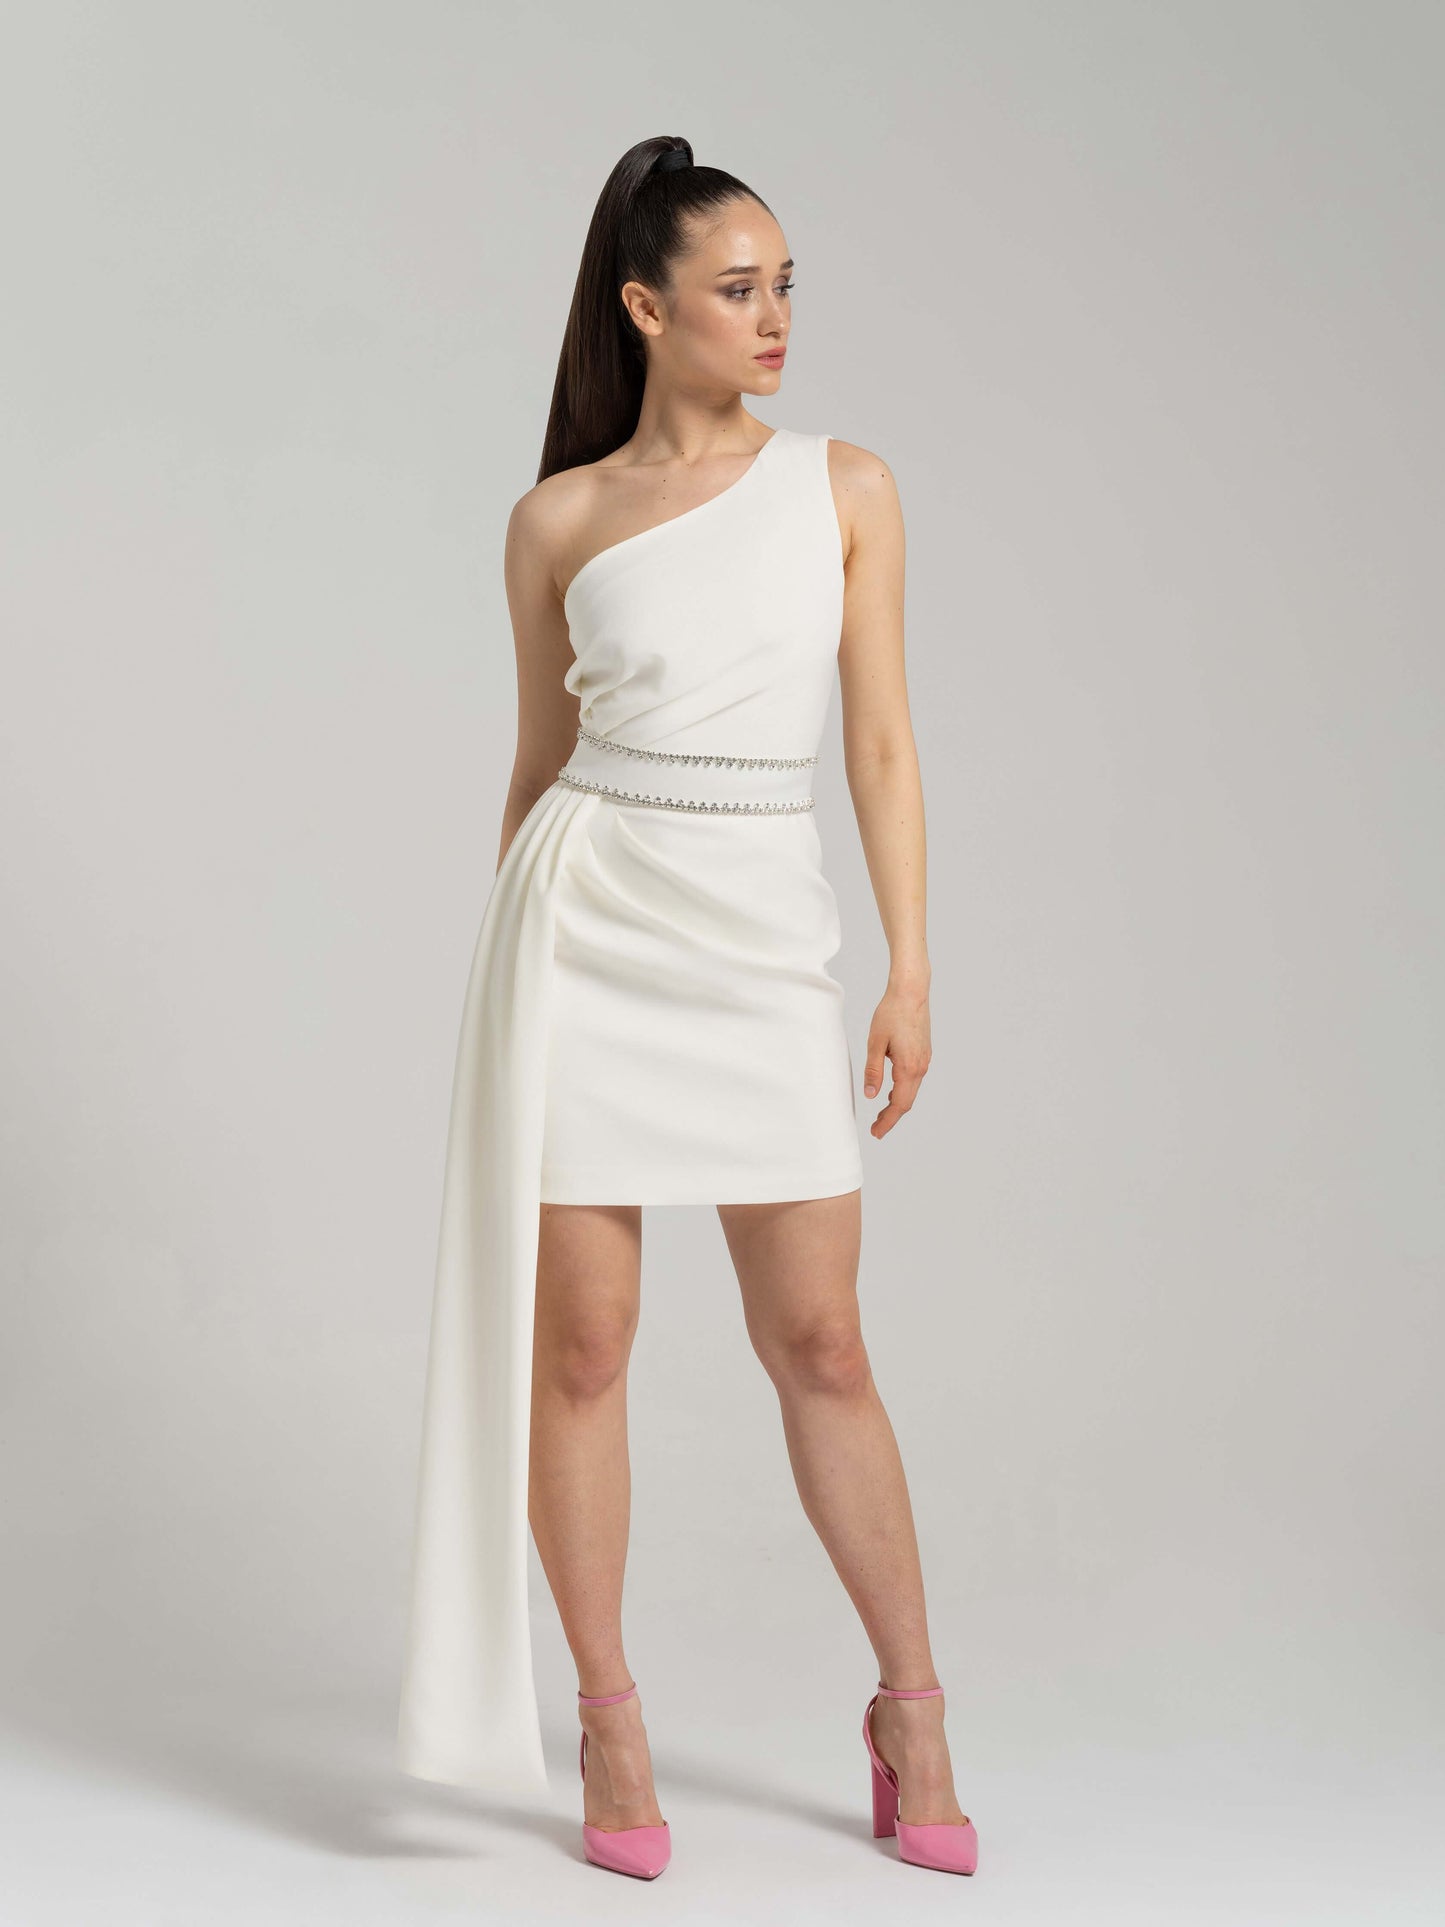 Iconic Glamour Crystal-Adorned Dress - White by Tia Dorraine Women's Luxury Fashion Designer Clothing Brand